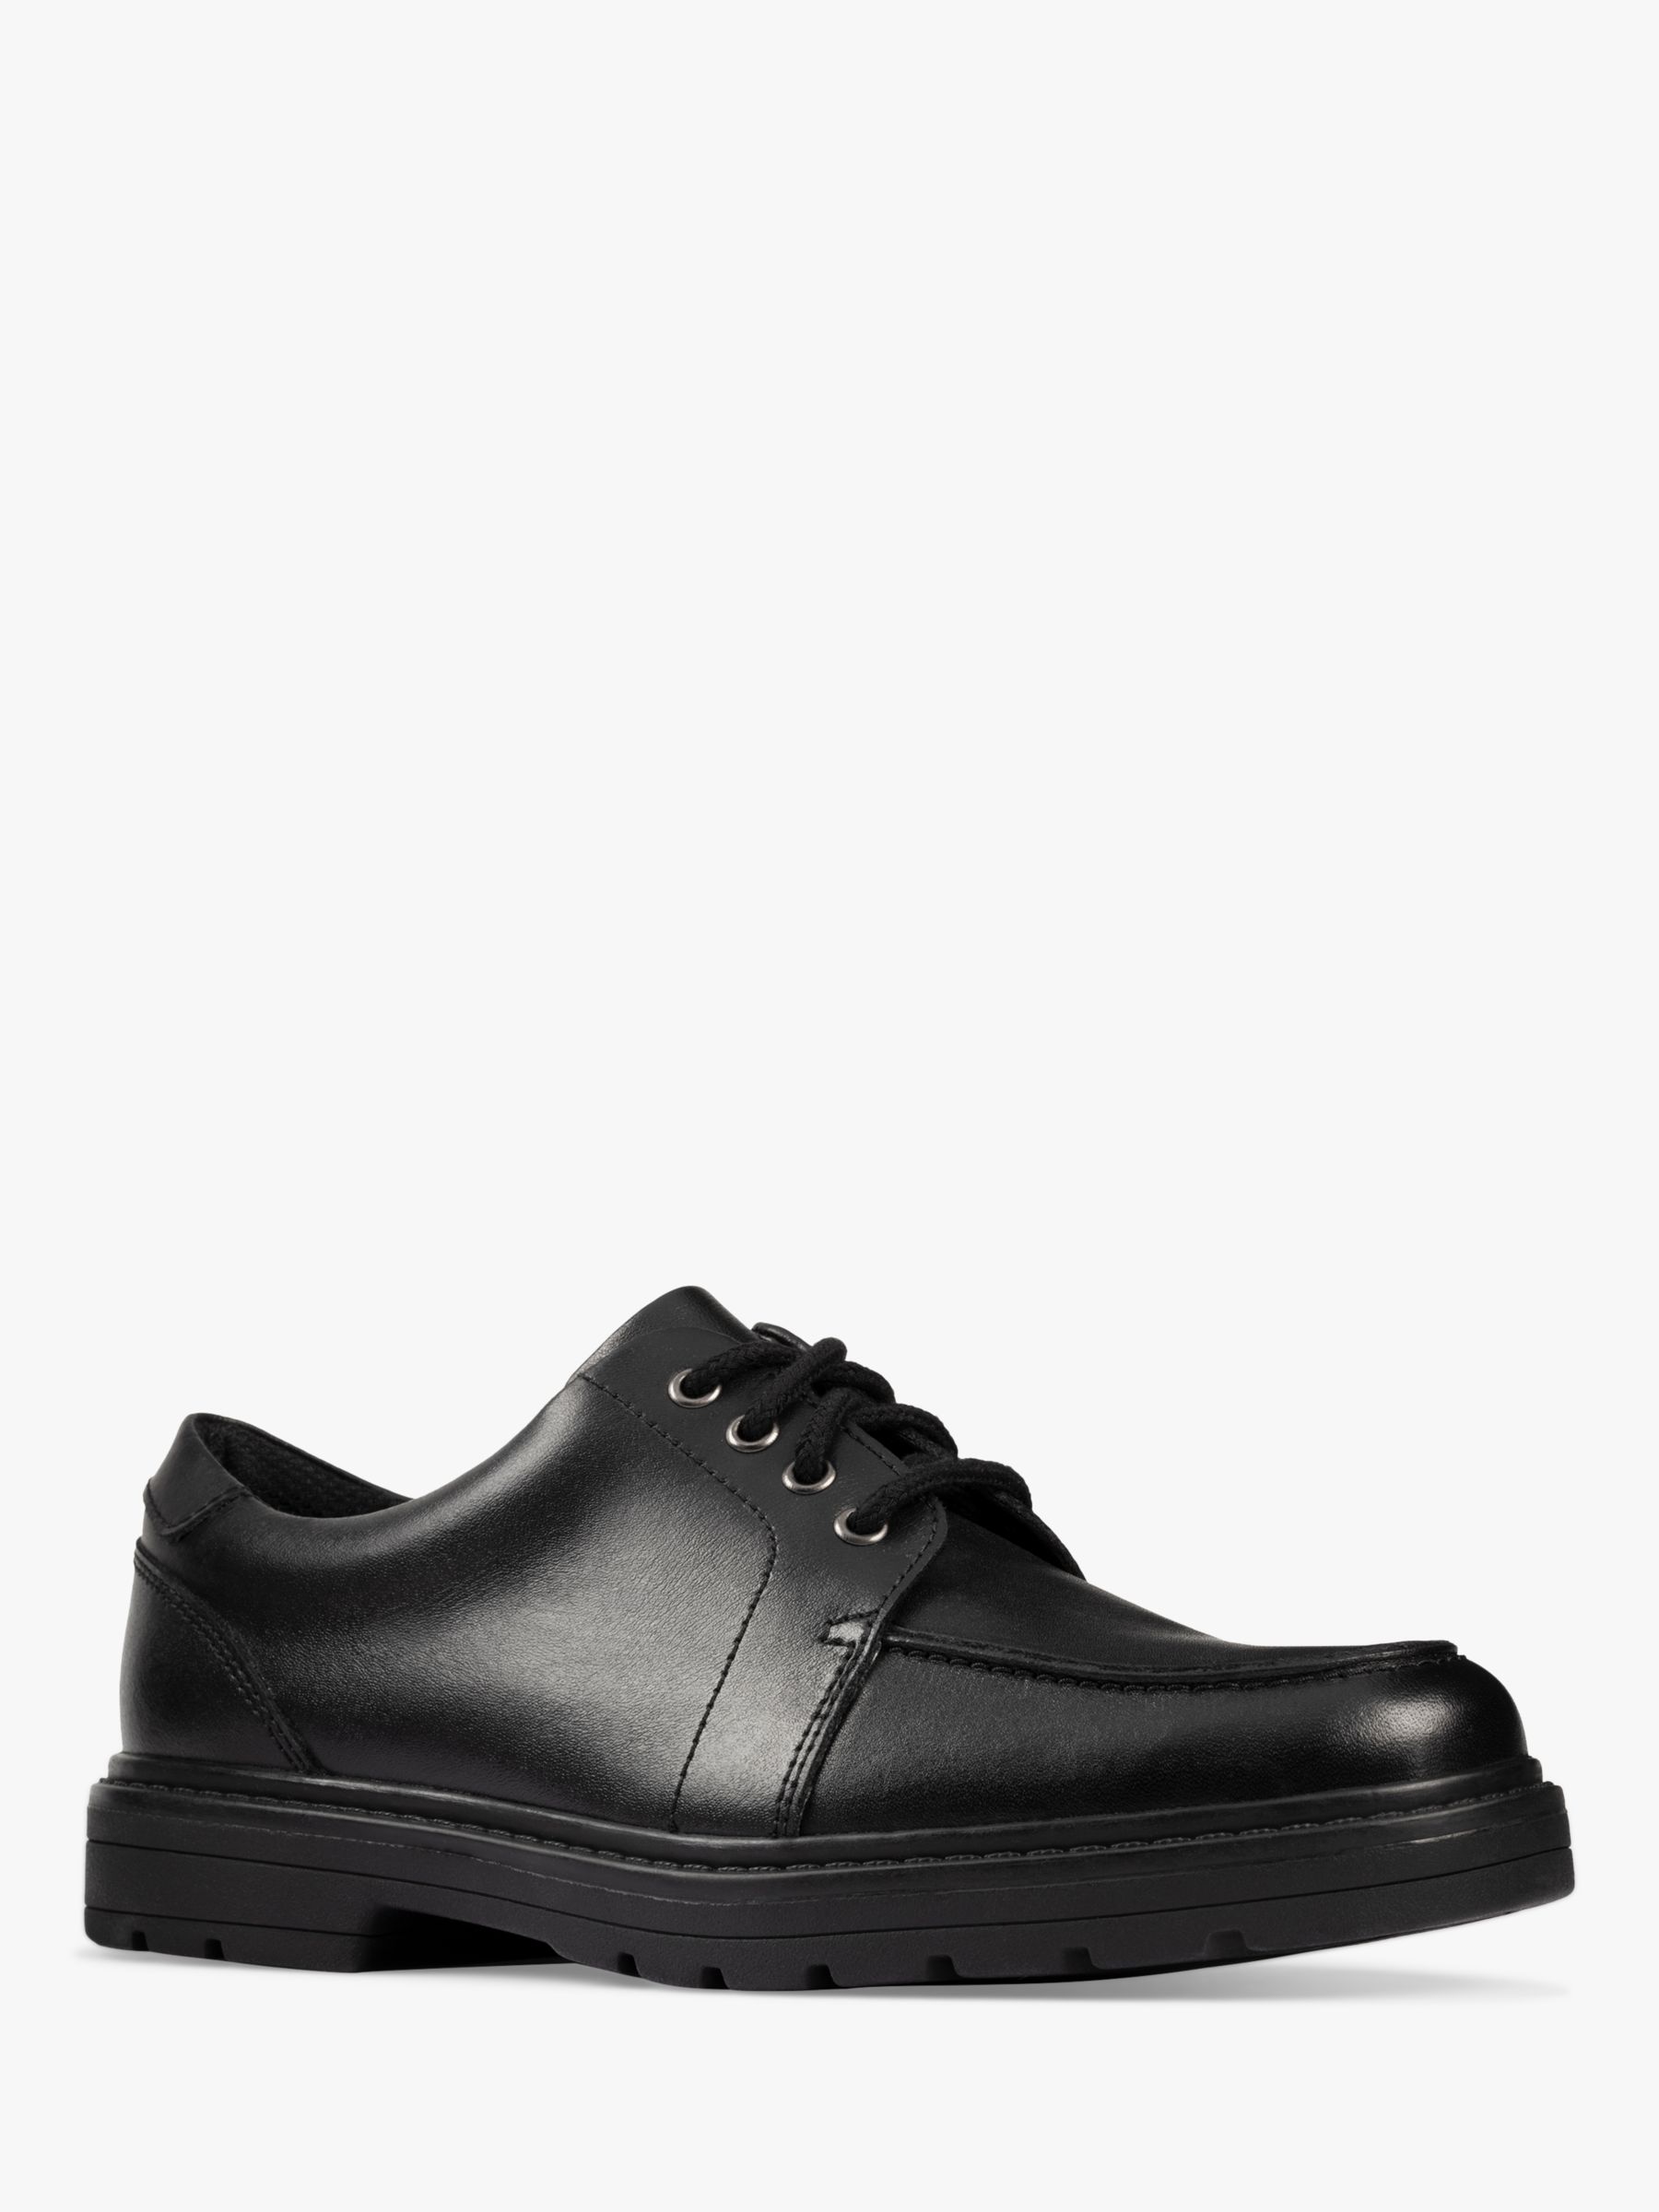 Clarks Kids' Loxham Pace Leather School Shoes, Black, 3F